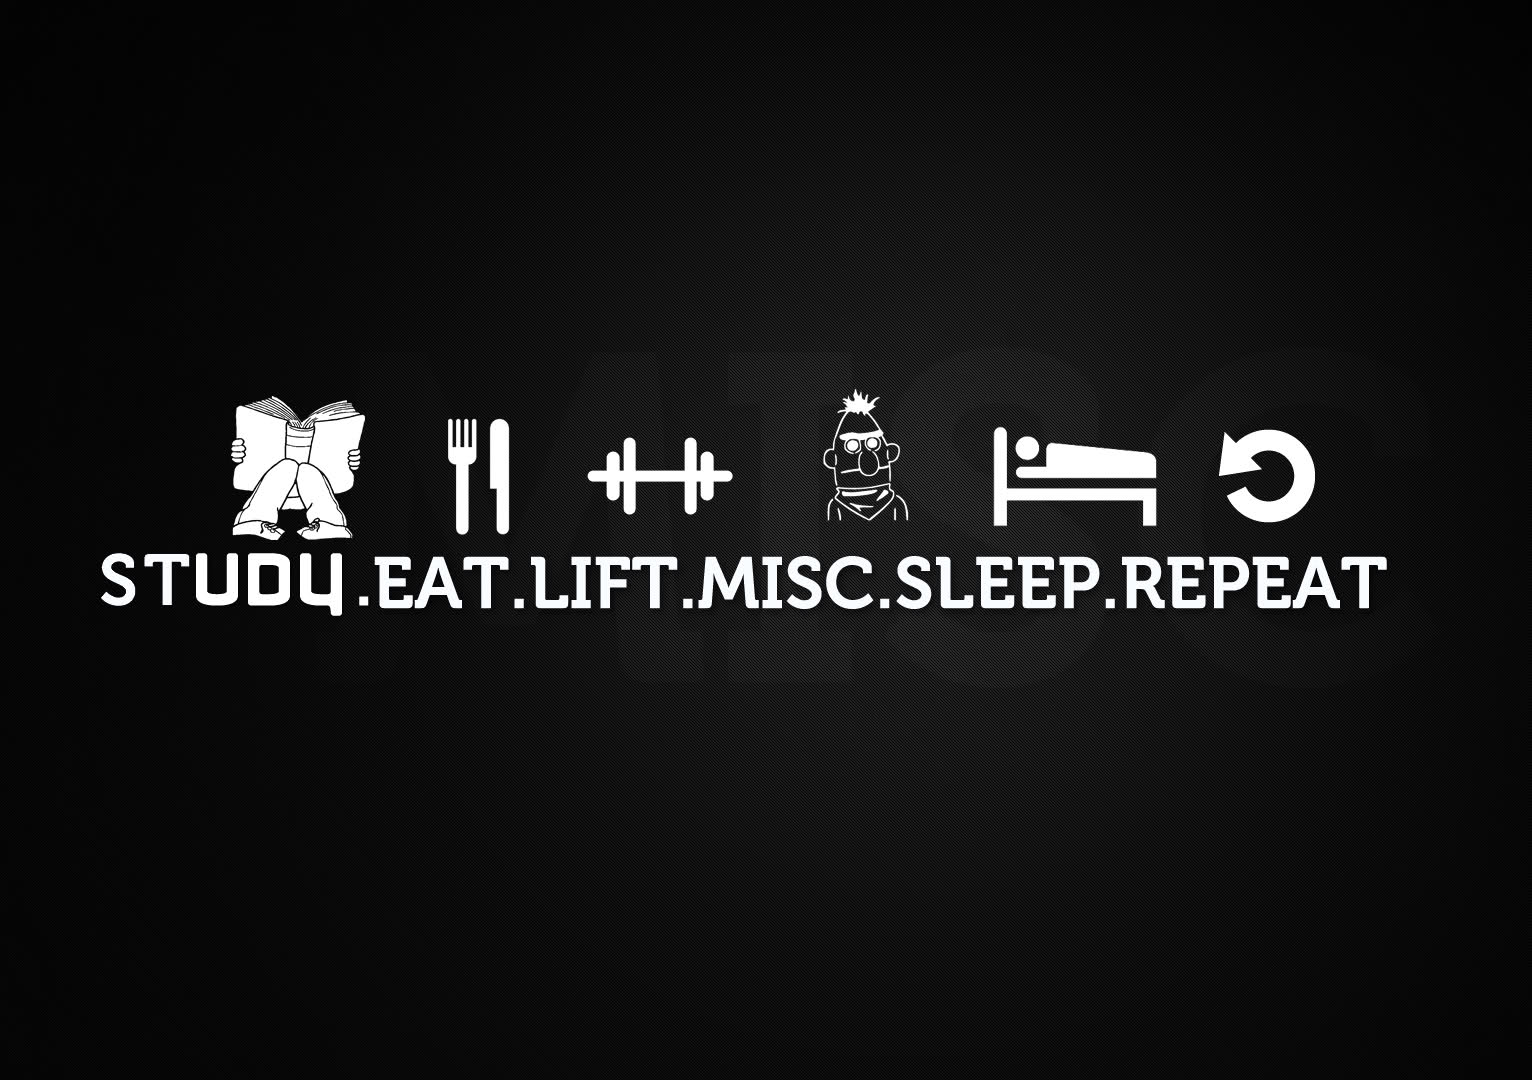 Beast Motivation Study eat lift misc sleep repeat